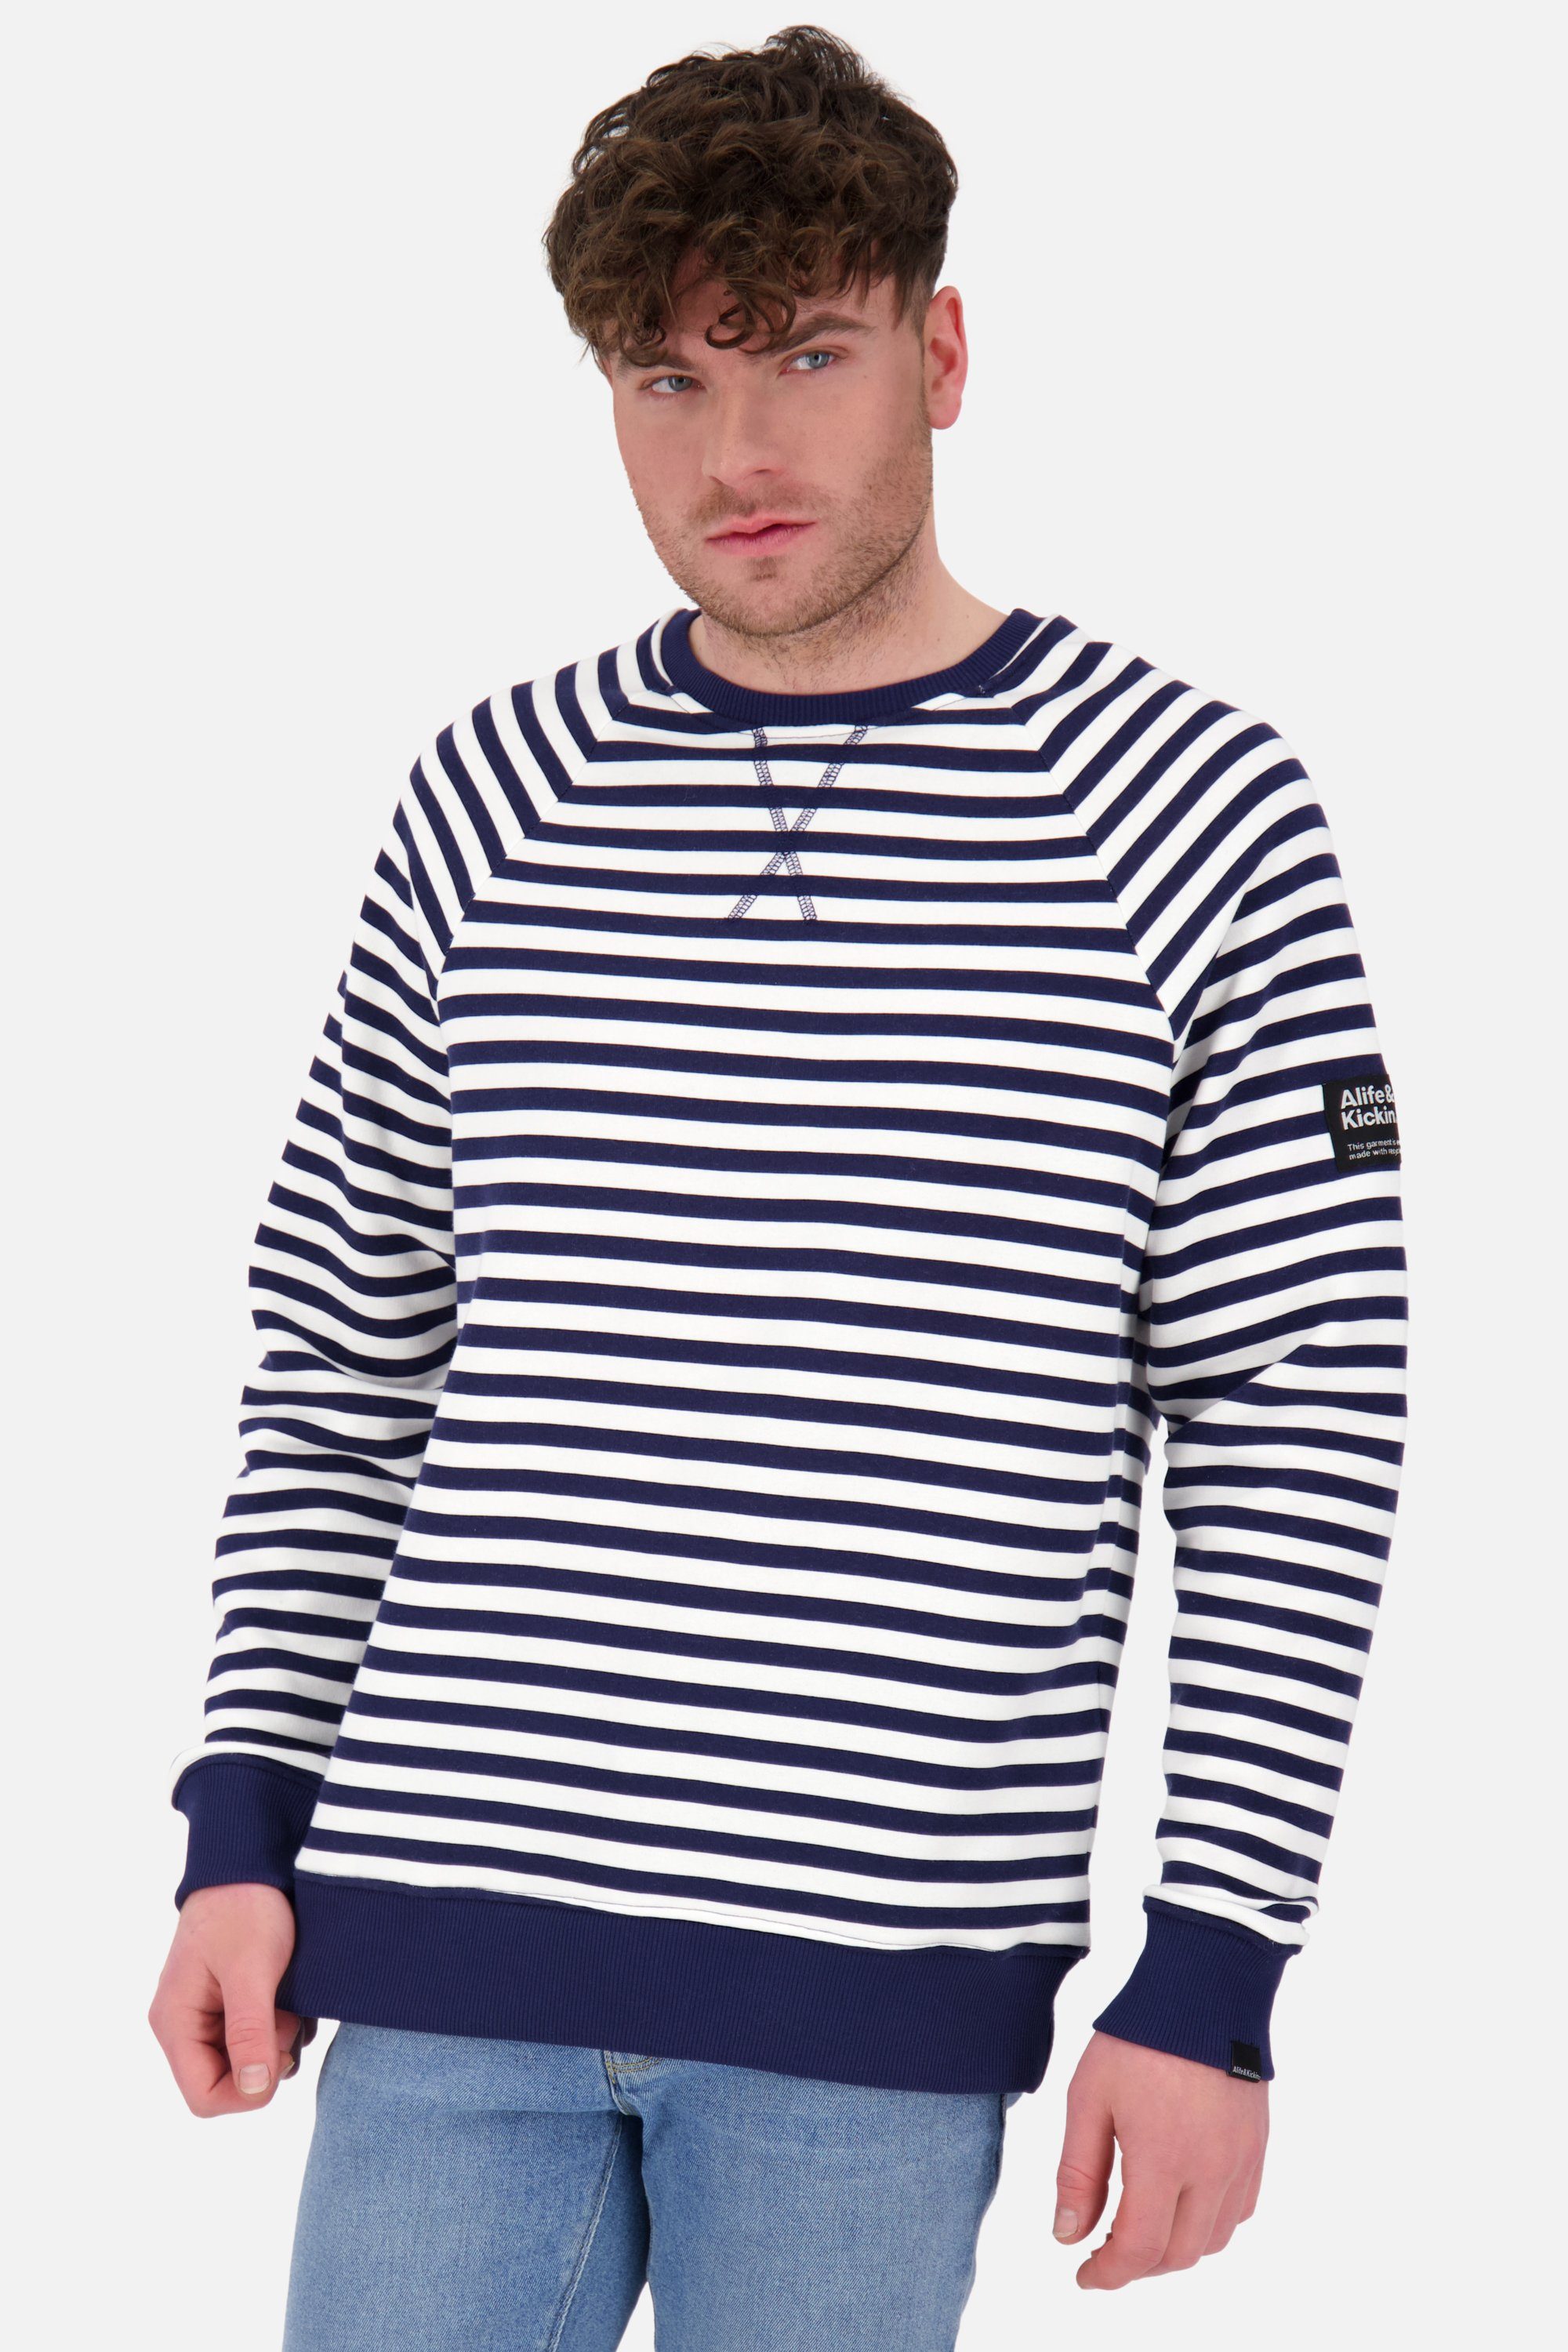 Alife & Kickin Z Rundhalspullover, BorisAK marine Pullover Sweatshirt Herren Sweatshirt